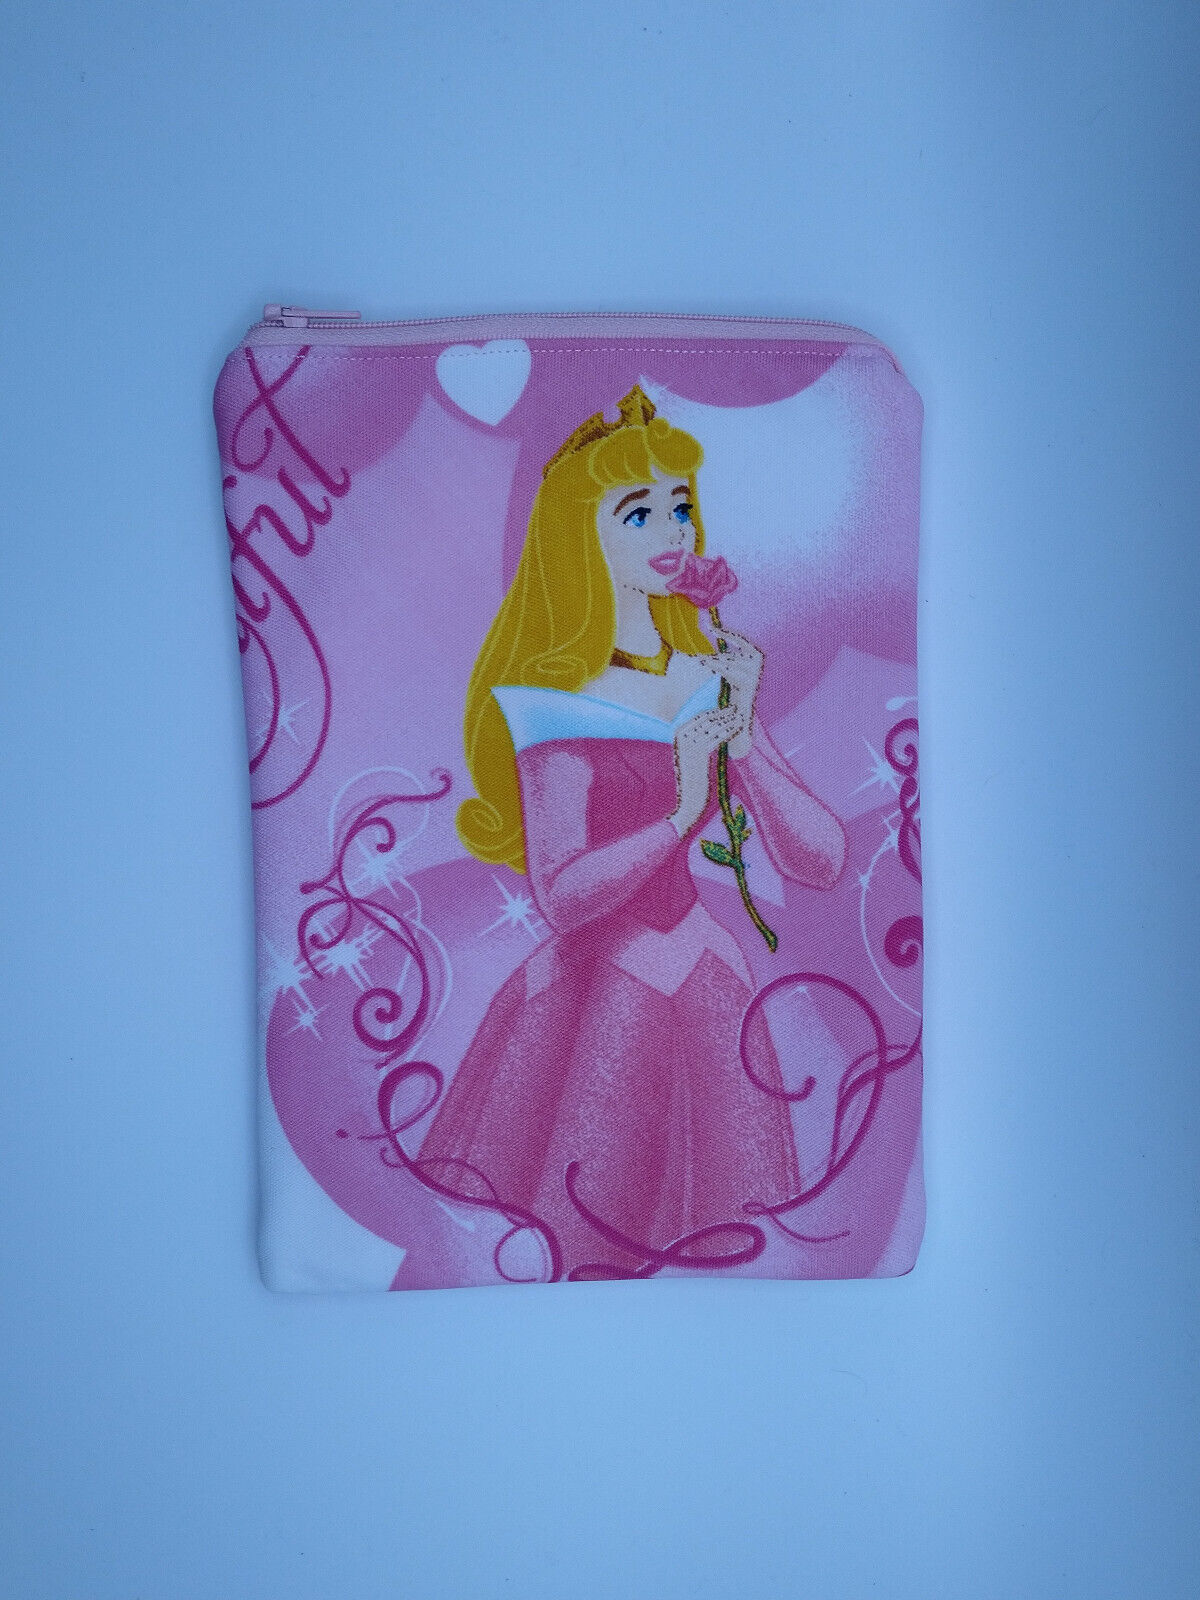 Handmade small zipper bag made with Sleeping Beauty Aurora Licensed fabric